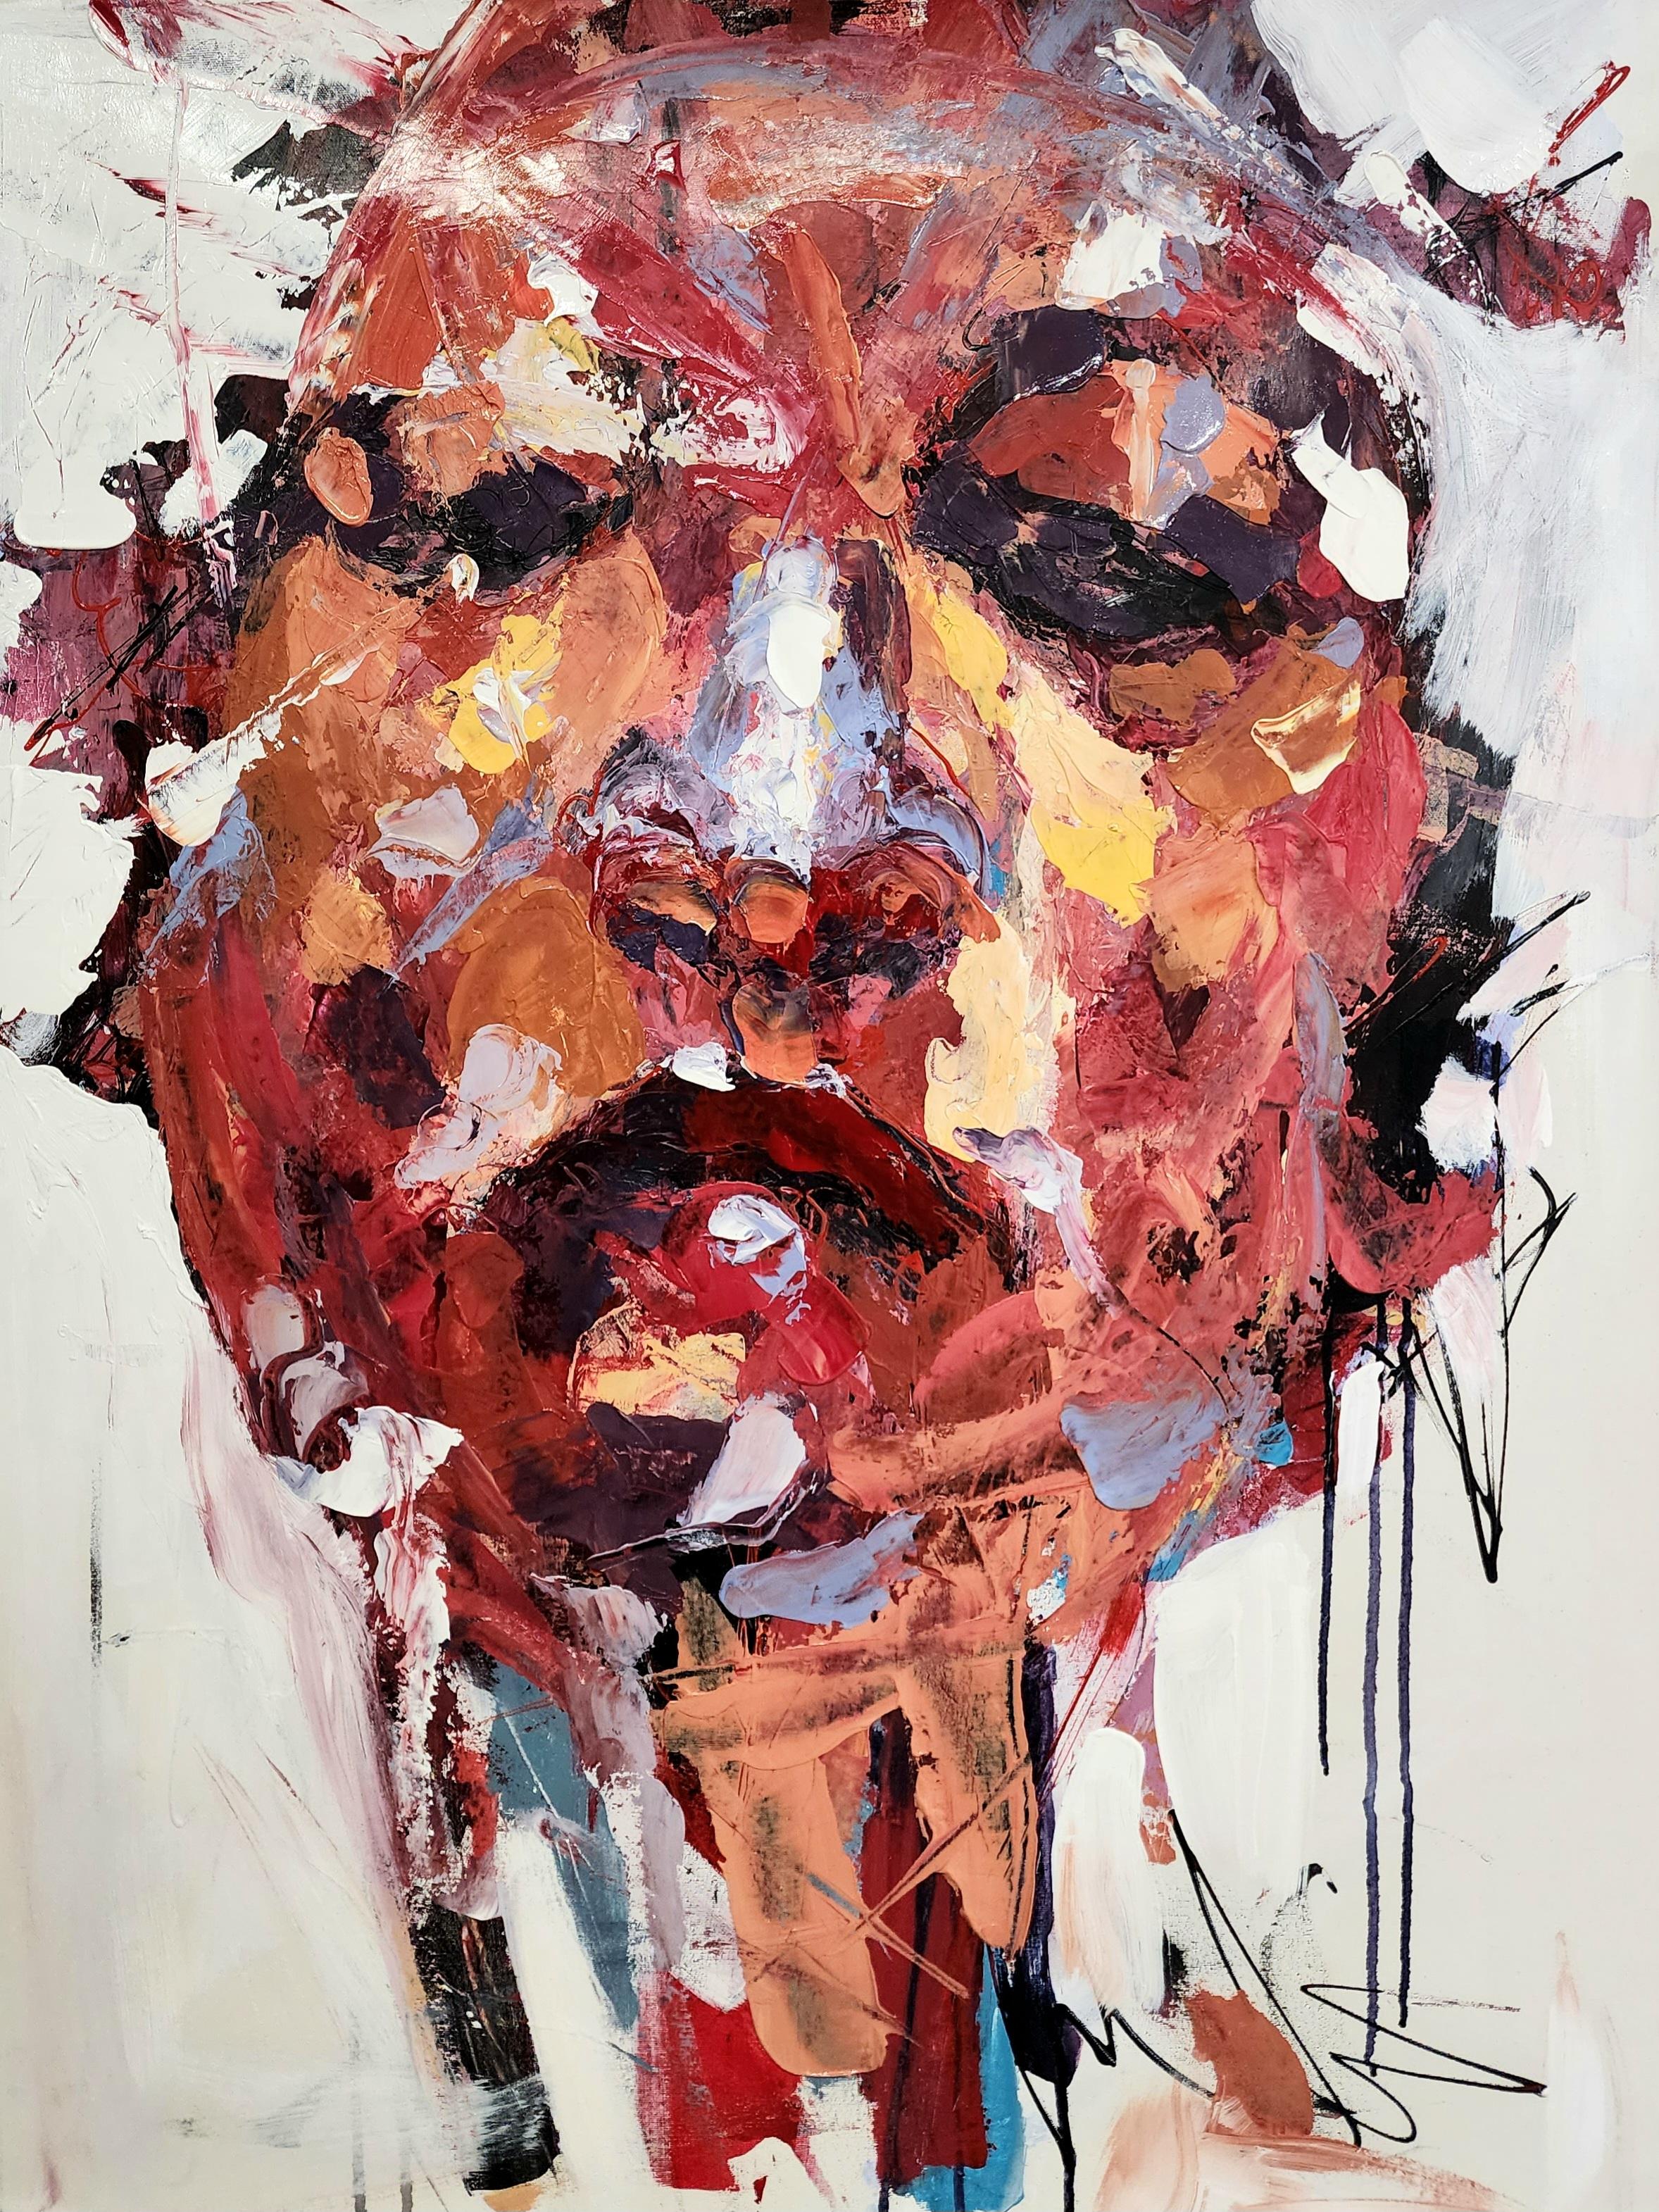 "OBLIVION" Abstract Painting 40" x 30" inch by Carlos Delgado